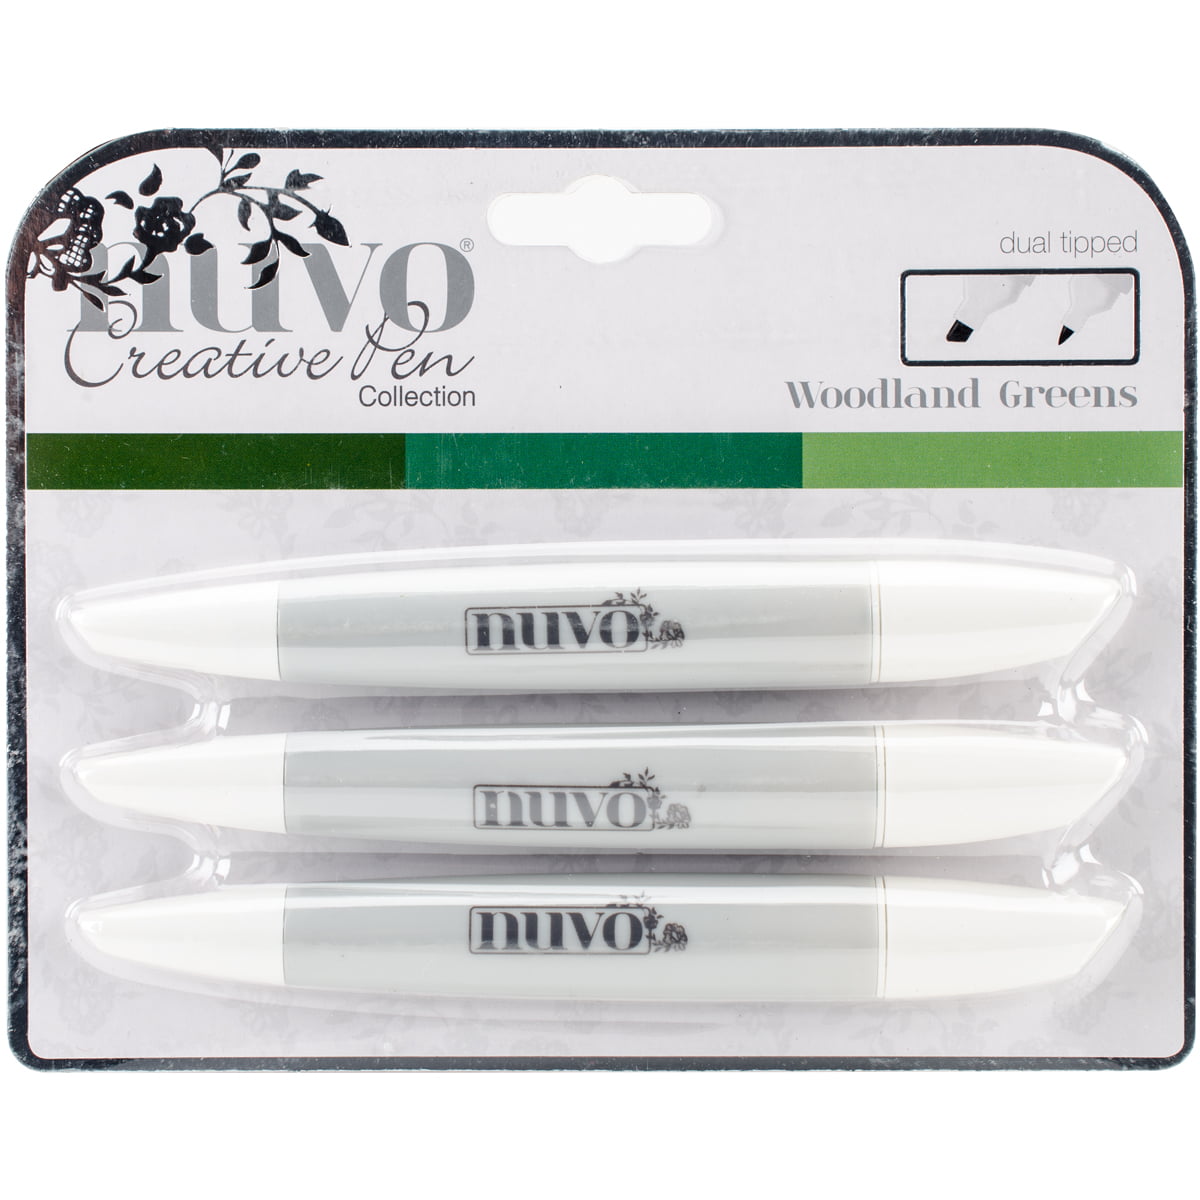 Nuvo Creative Pen Collection Organic Greens